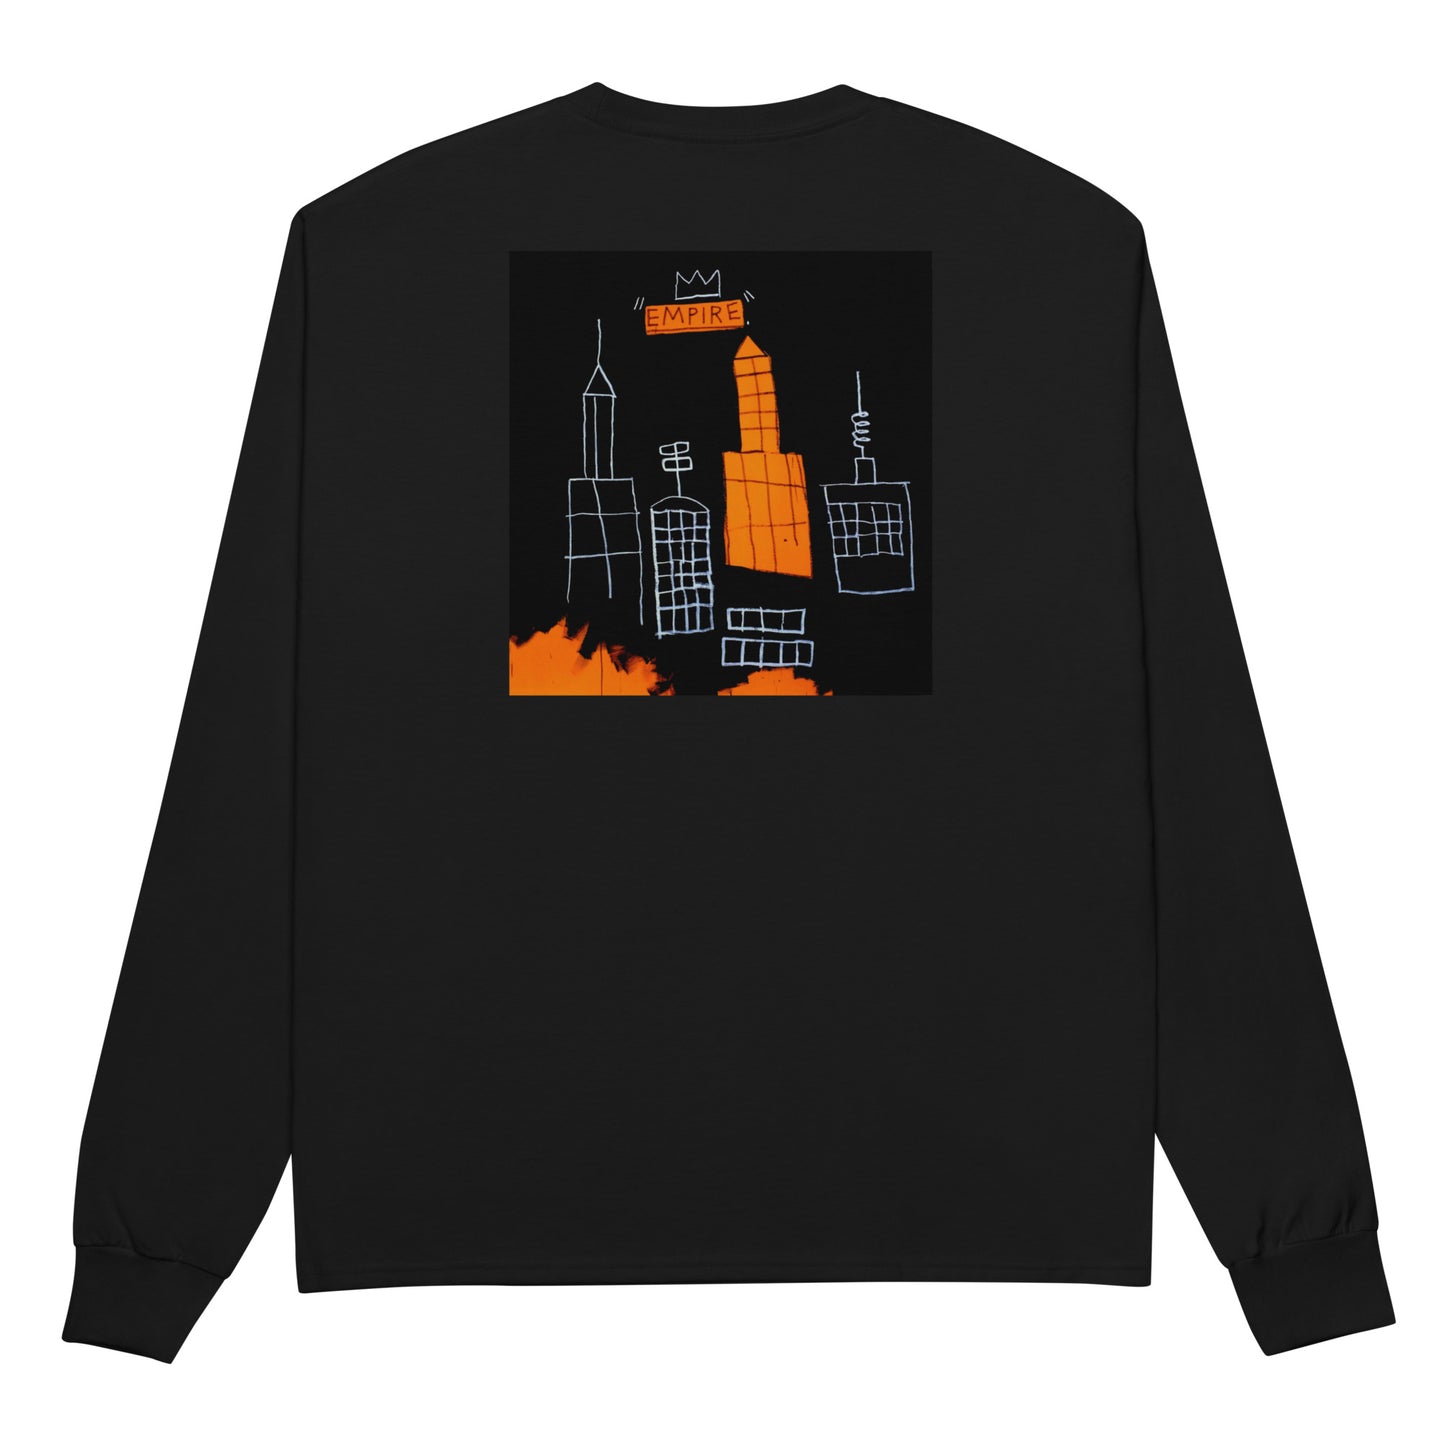 Jean-Michel Basquiat "Mecca" Artwork Embroidered + Printed Premium Champion Streetwear Long Sleeve Shirt Black